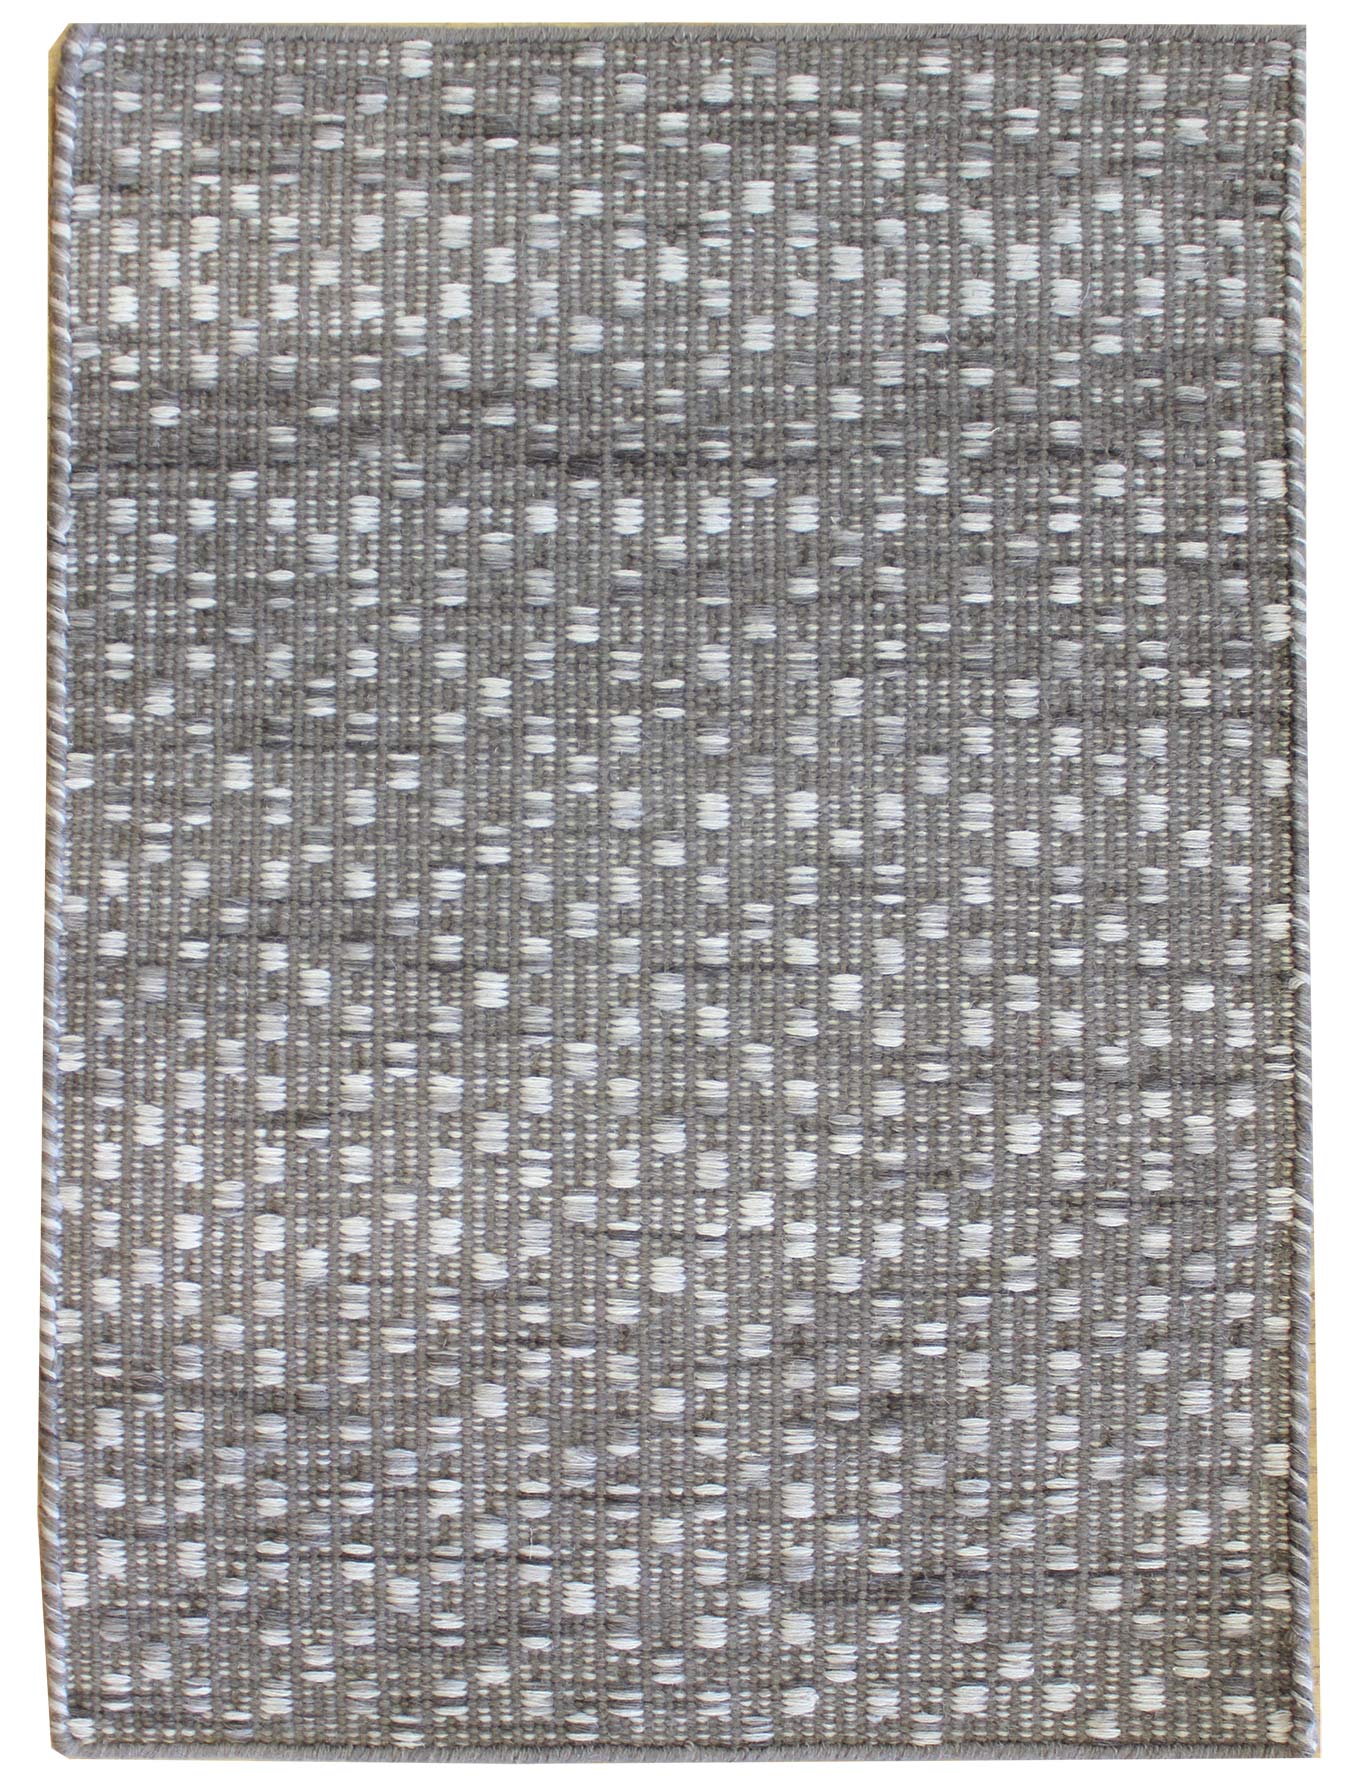 Speckles Handwoven Contemporary Rug